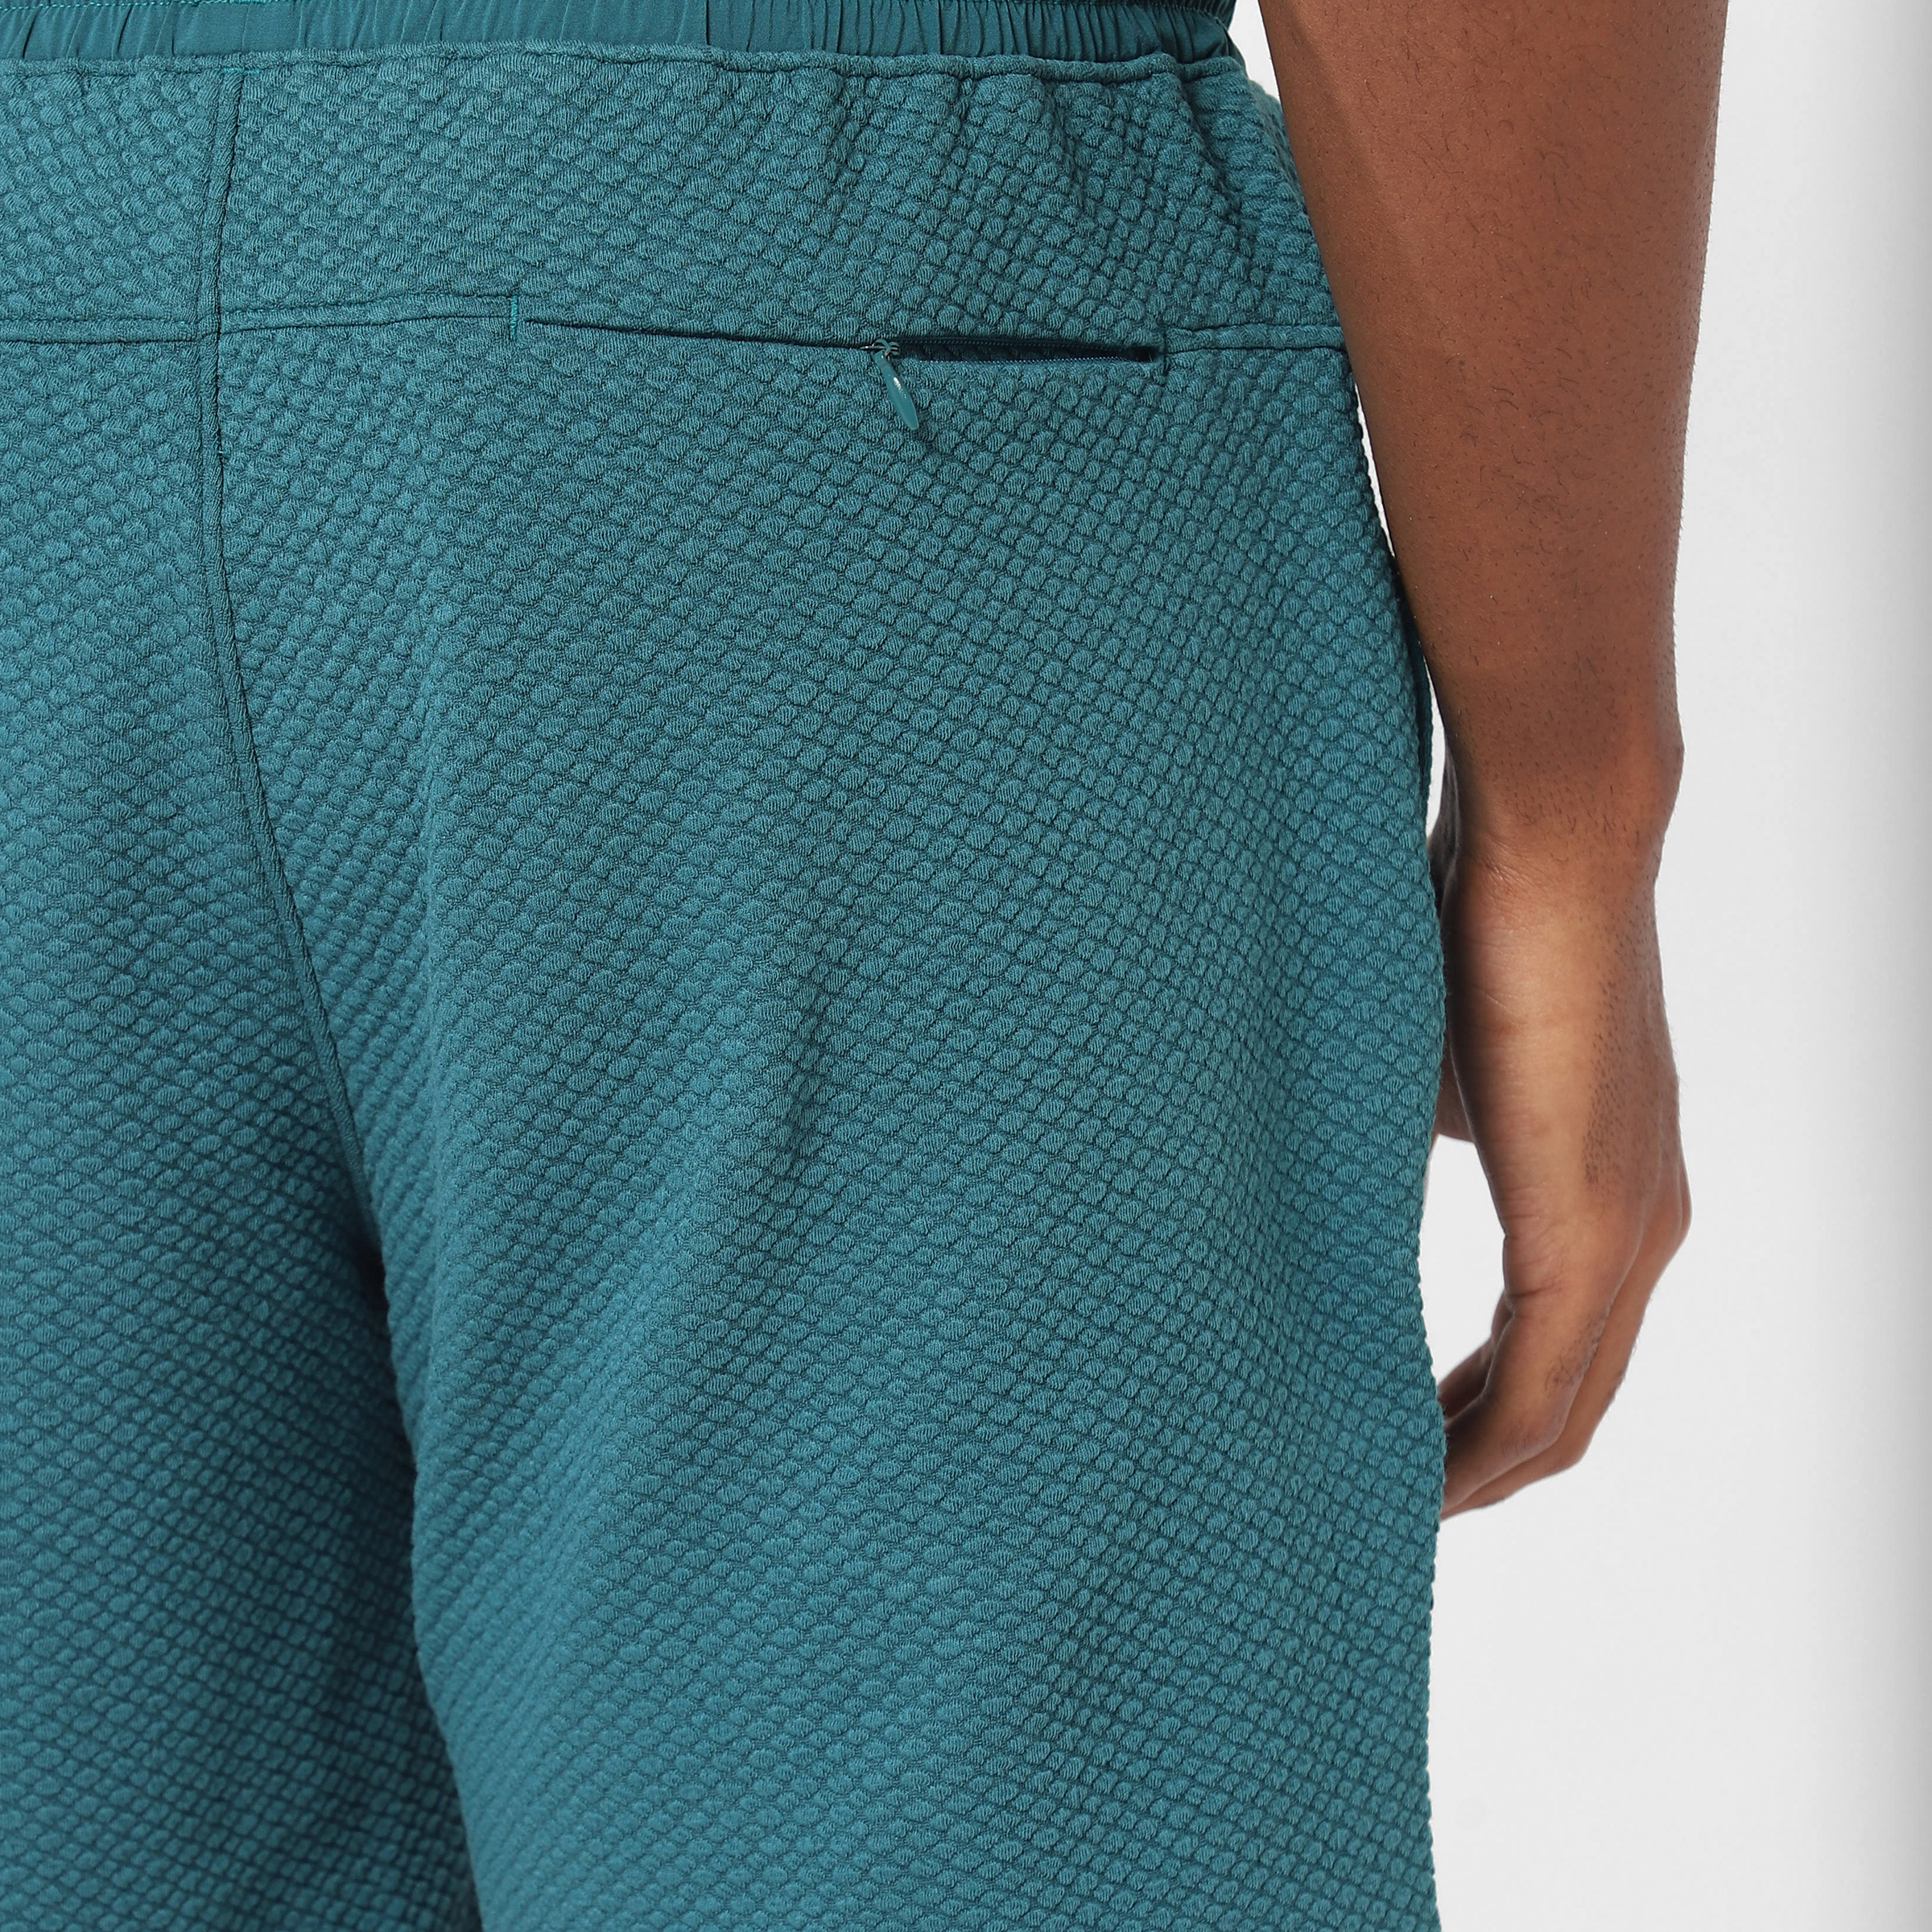 Roam Short 7" Dark Teak close up of back zipper pocket